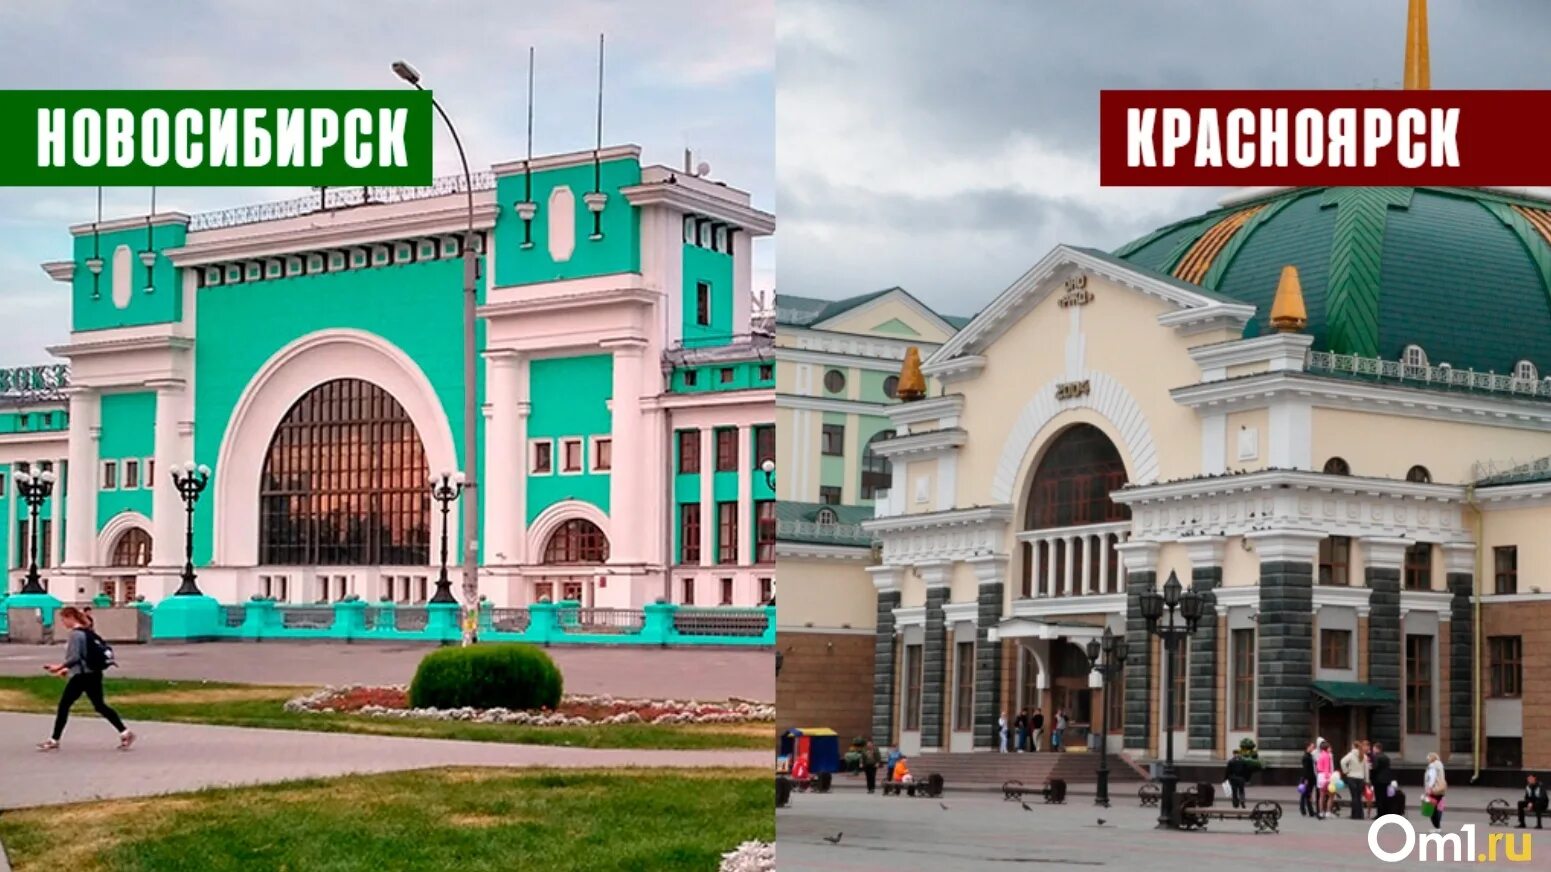 Какими товарами известен новосибирск. Новосибирск вокзал. Новосибирск столица Сибири. ЖД вокзал Новосибирск. Новосибирский вокзал башня.